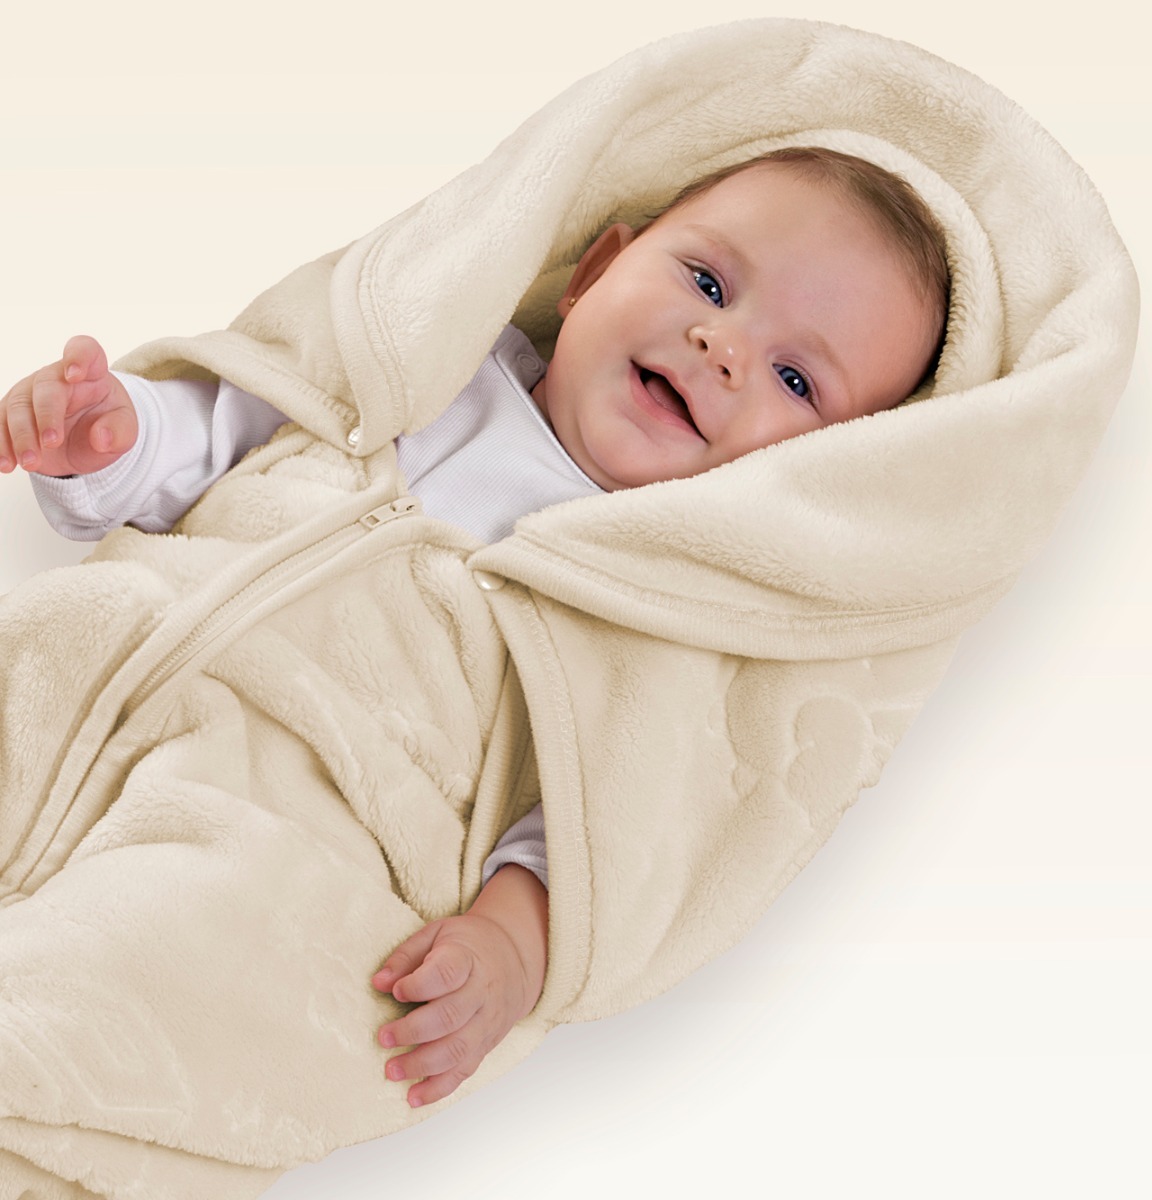 Baby Sac 2 Em 1 Cobertor E Saco De Dormir Bebe Jolitex